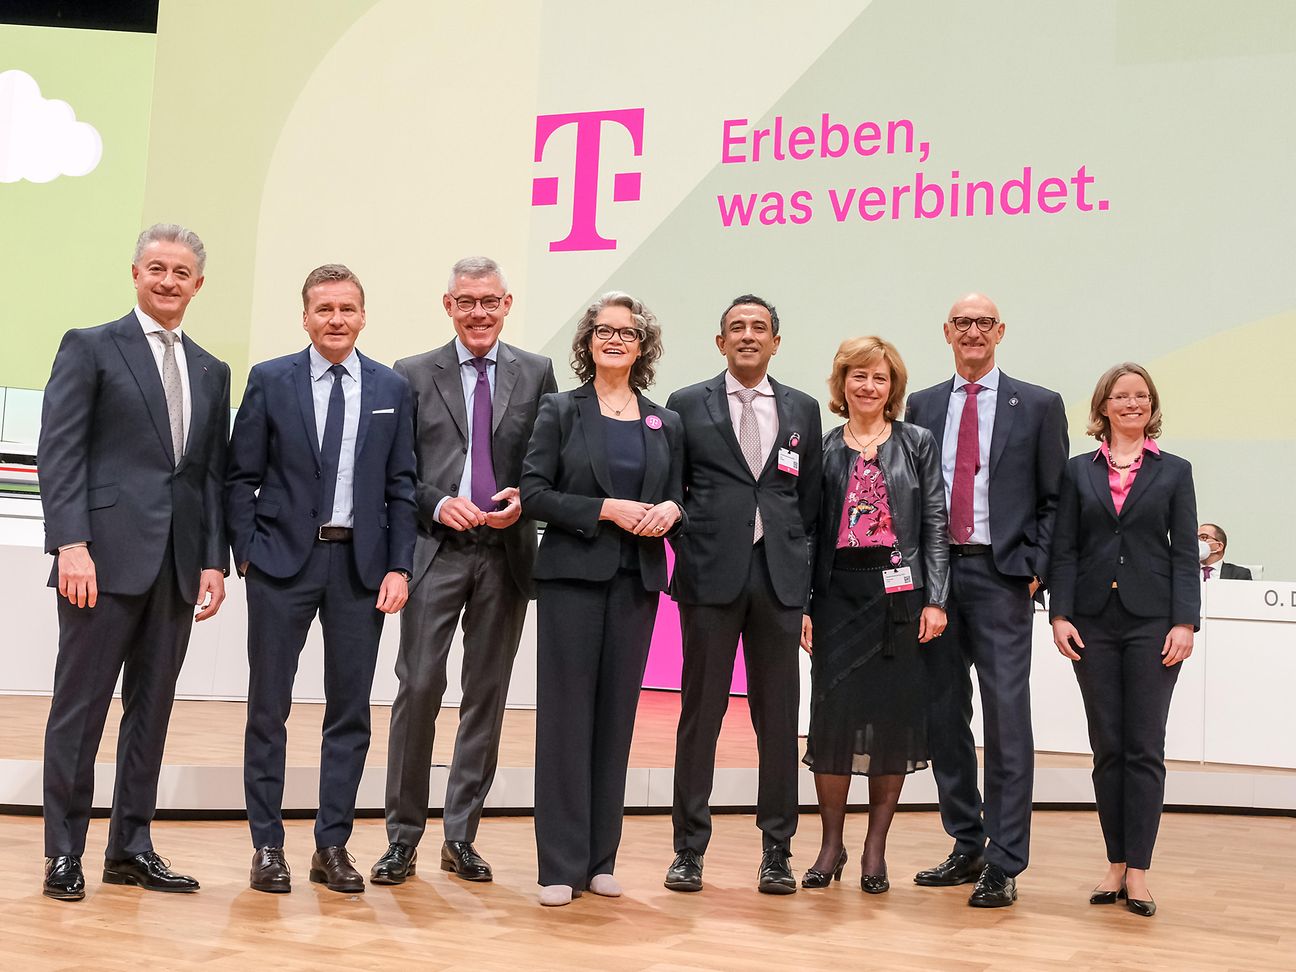 Deutsche Telekom an anchor of stability in uncertain times